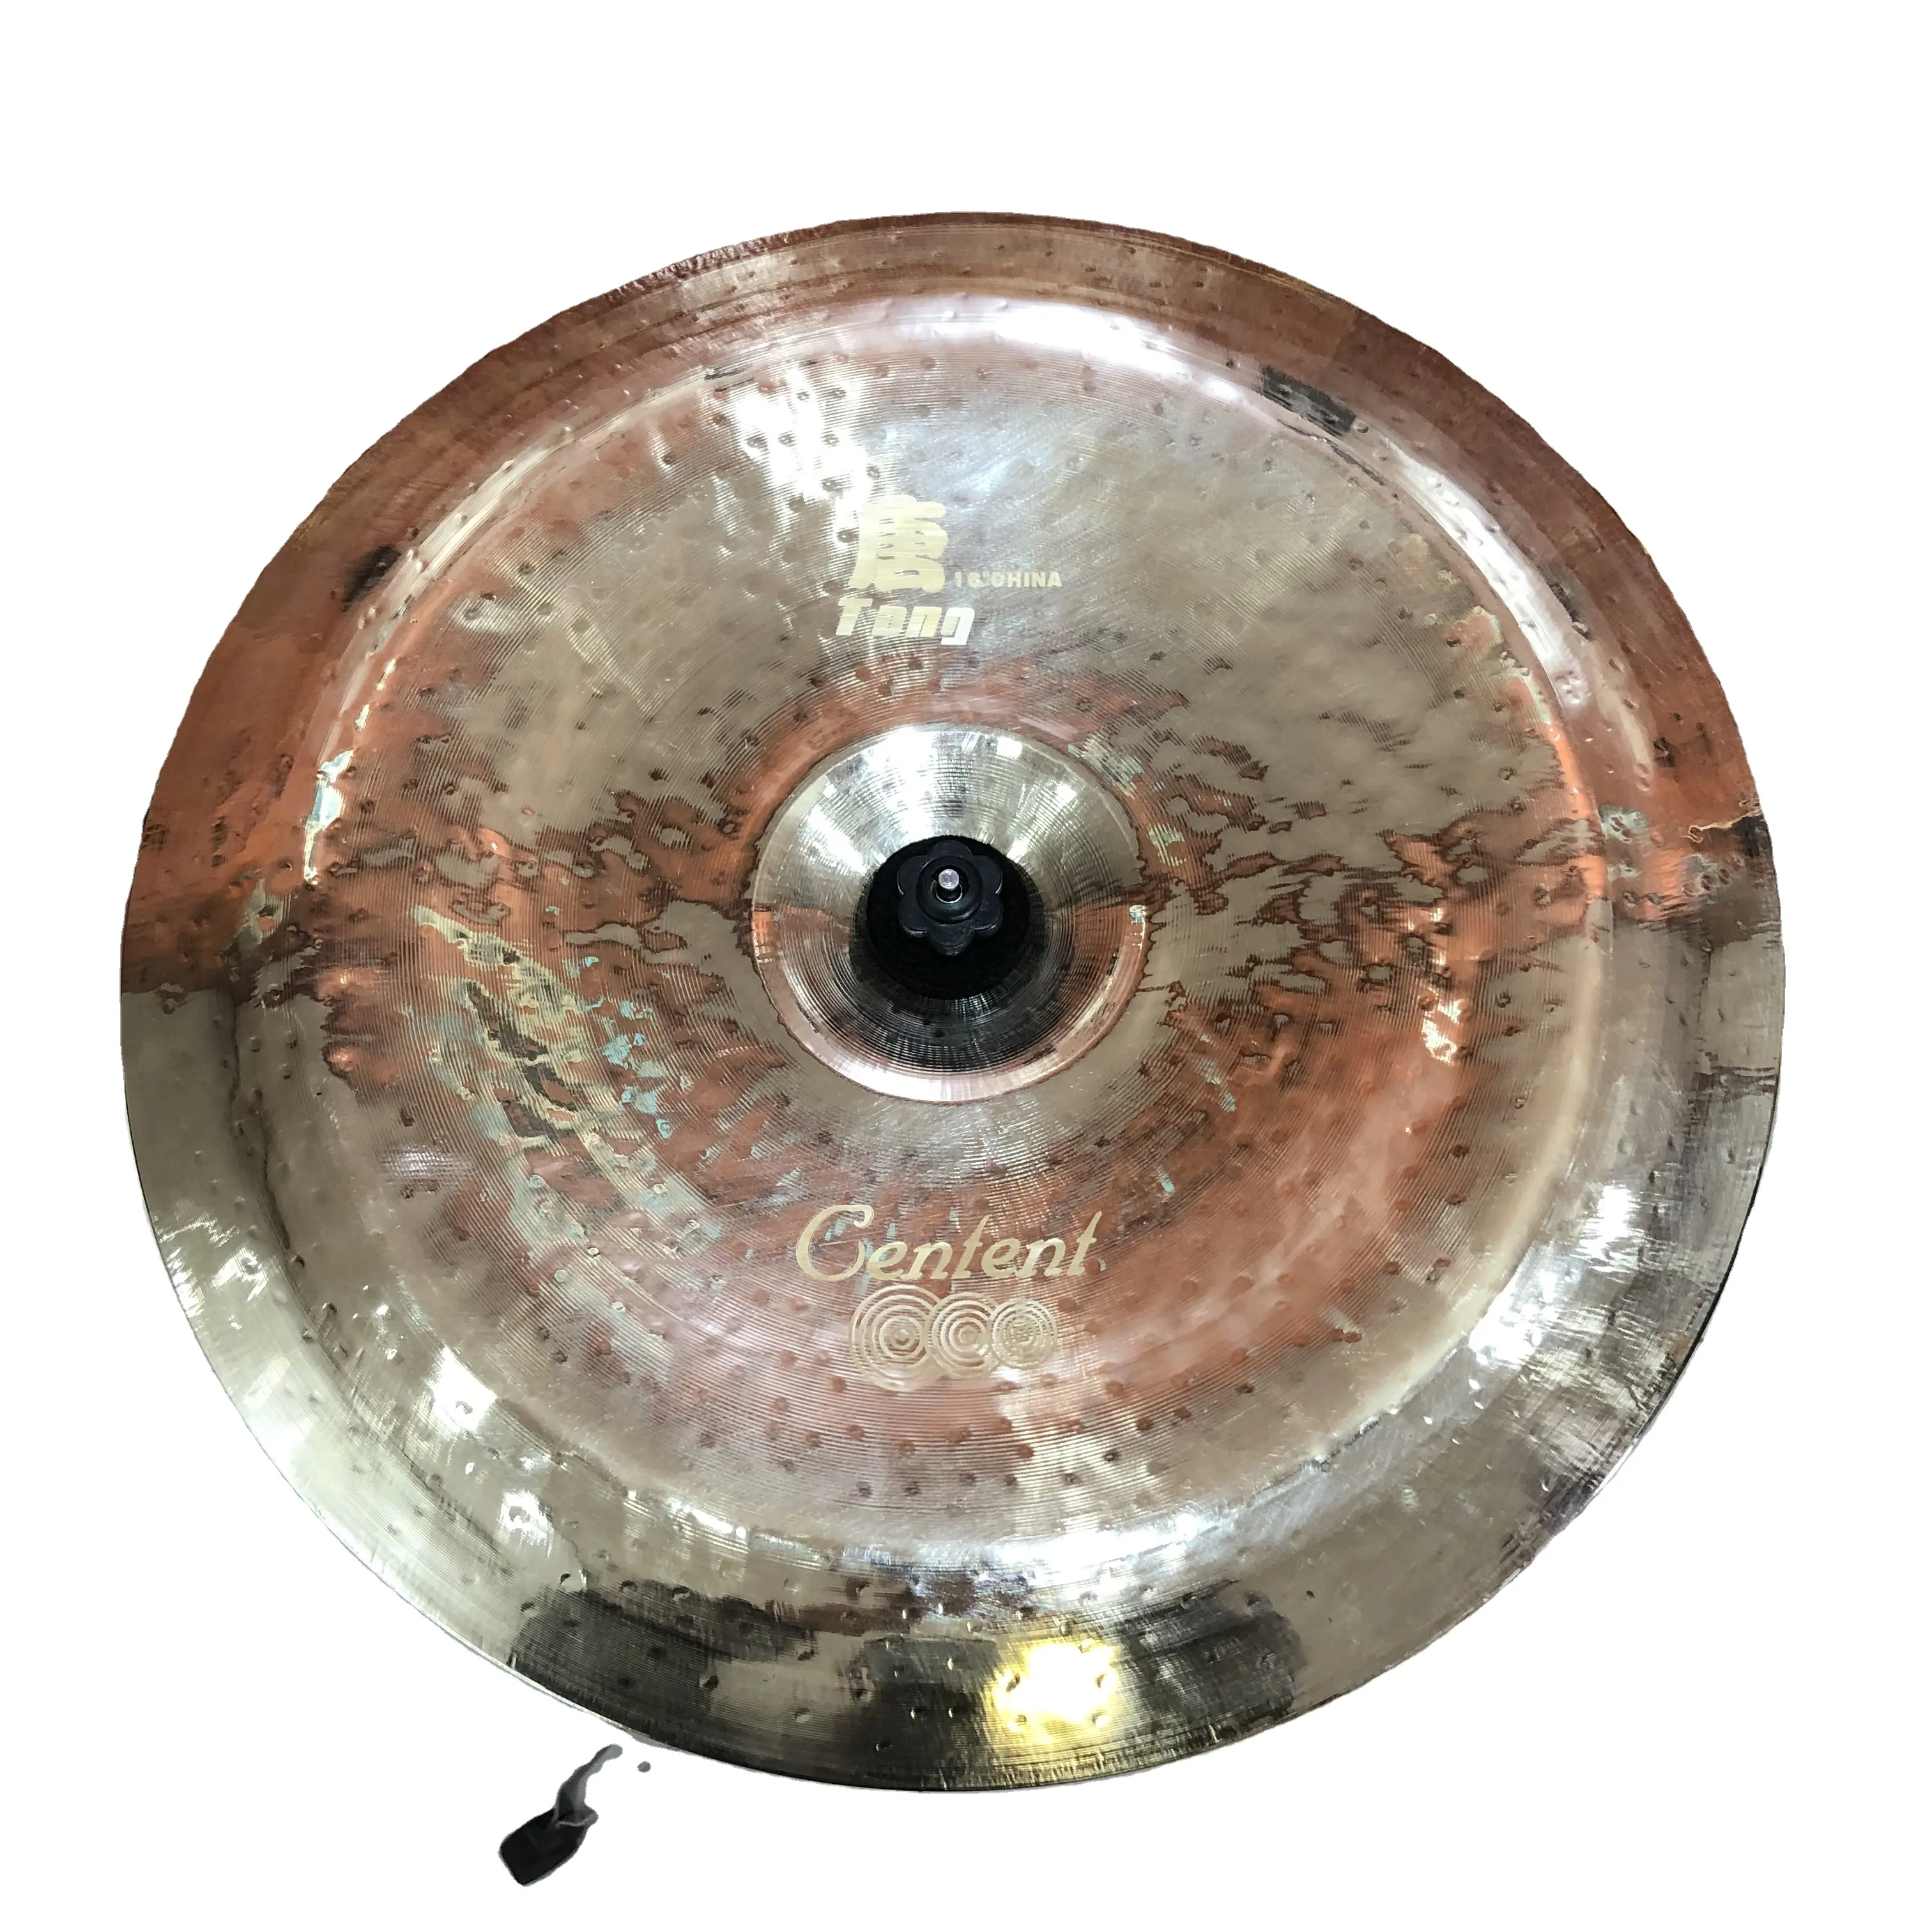 Customizable B20 Bronze Cymbals Happy Hat Cymbals Rock Music Drum Cymbals